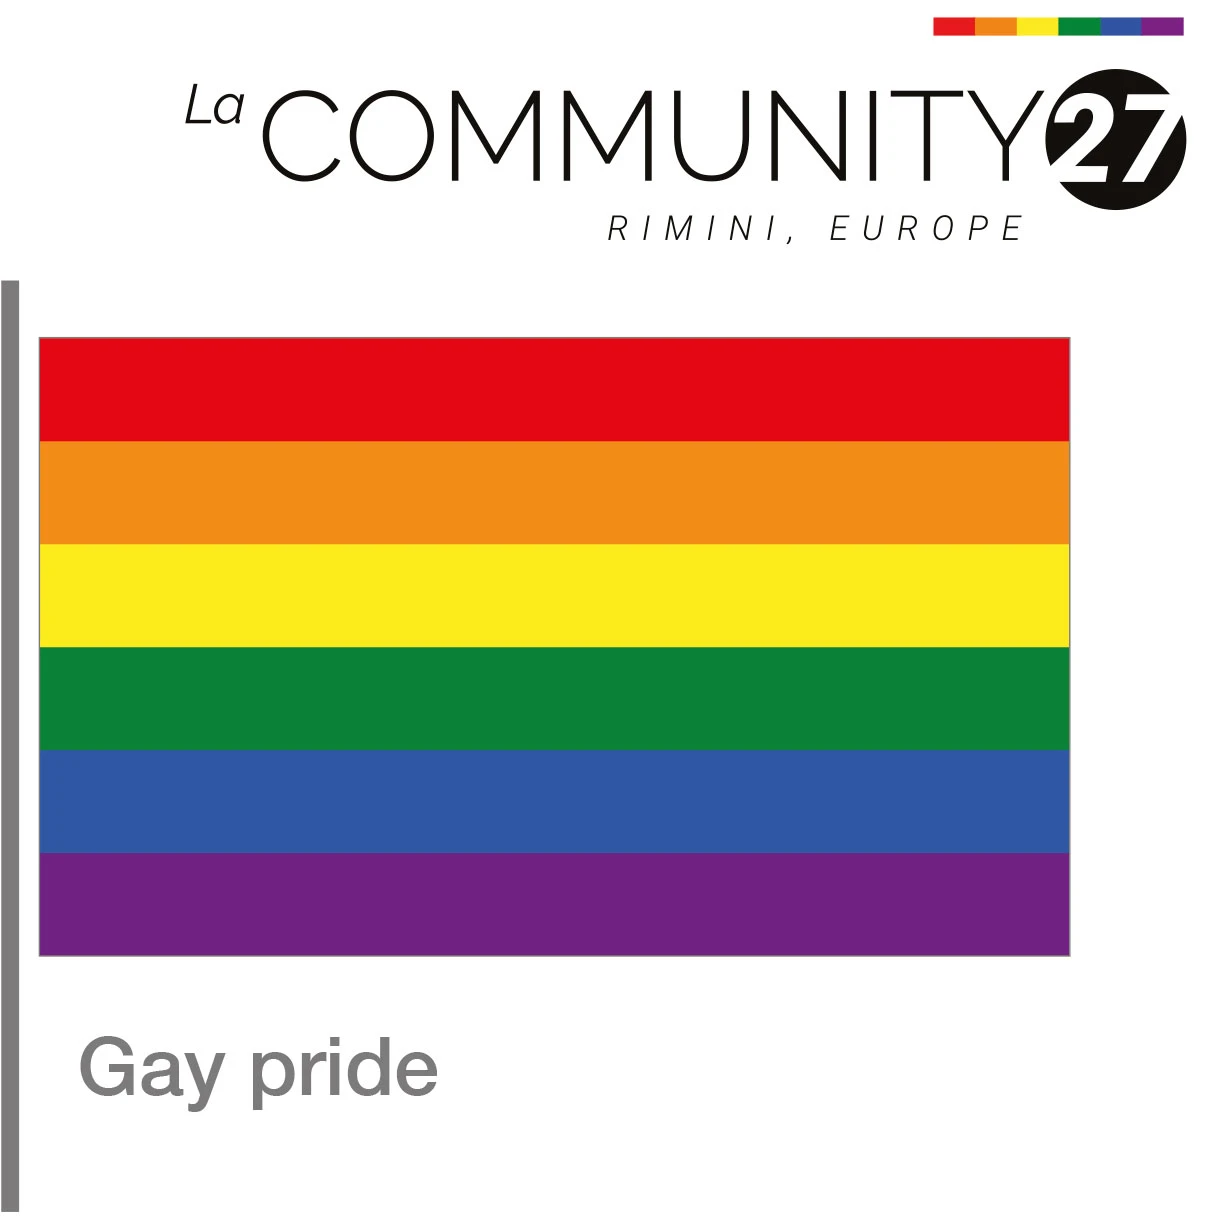 Gay pride - bandiera LGBTQ in uso - La Communty 27